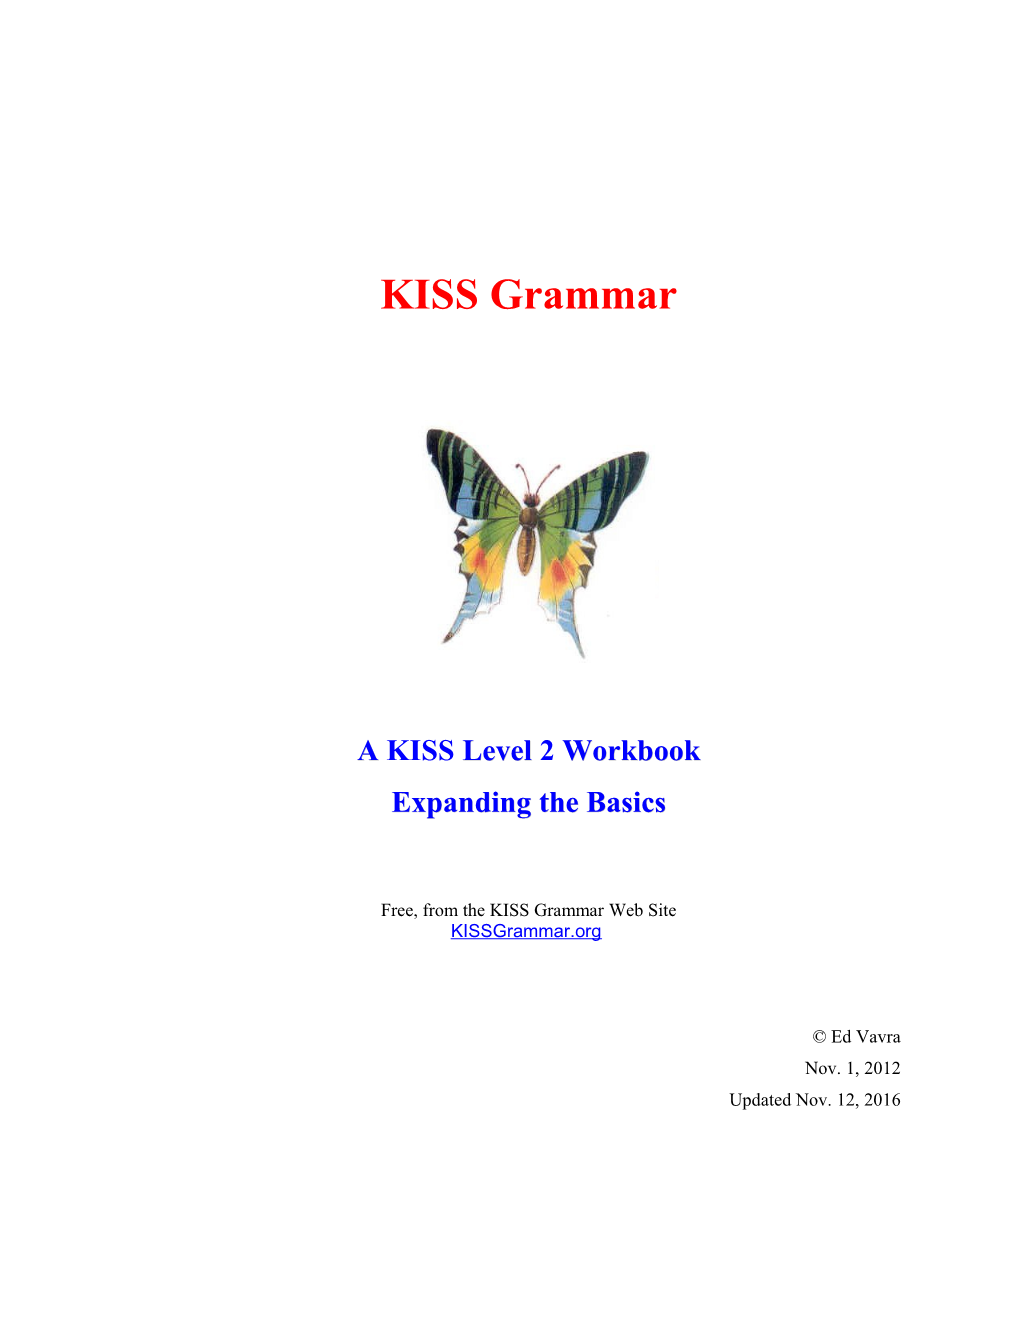 A KISS Level 2 Workbook